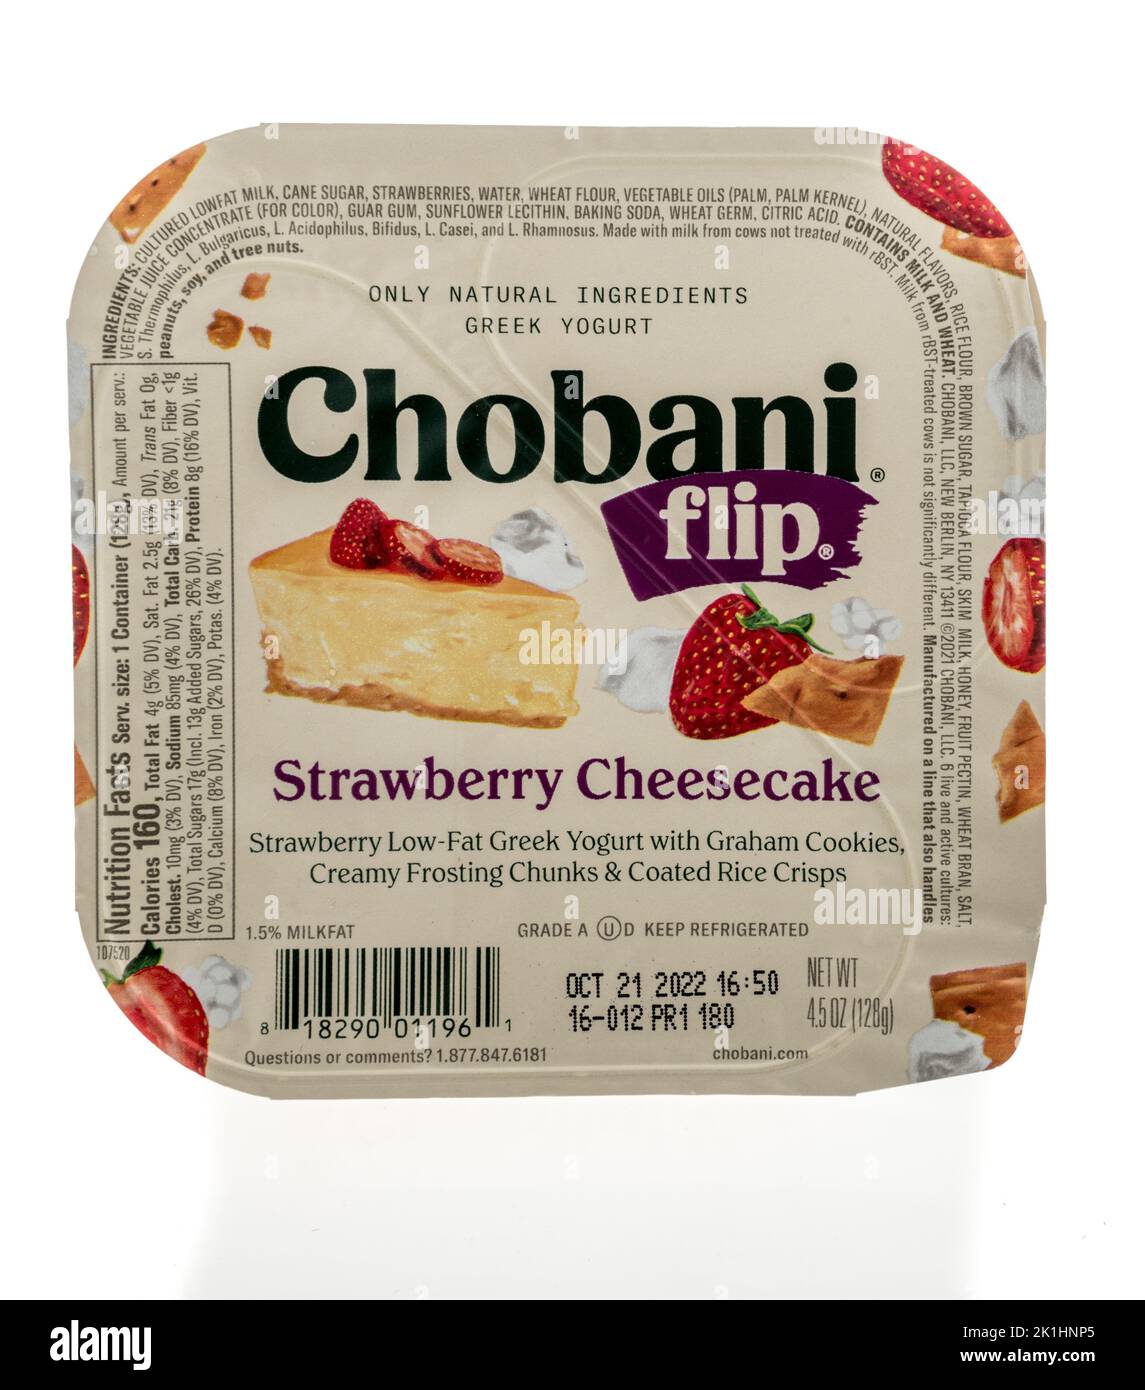 Winneconne, WI - 18 September 2022: A package of Chobani flip strawberry cheesecake greek yogurt on an isolated background. Stock Photo